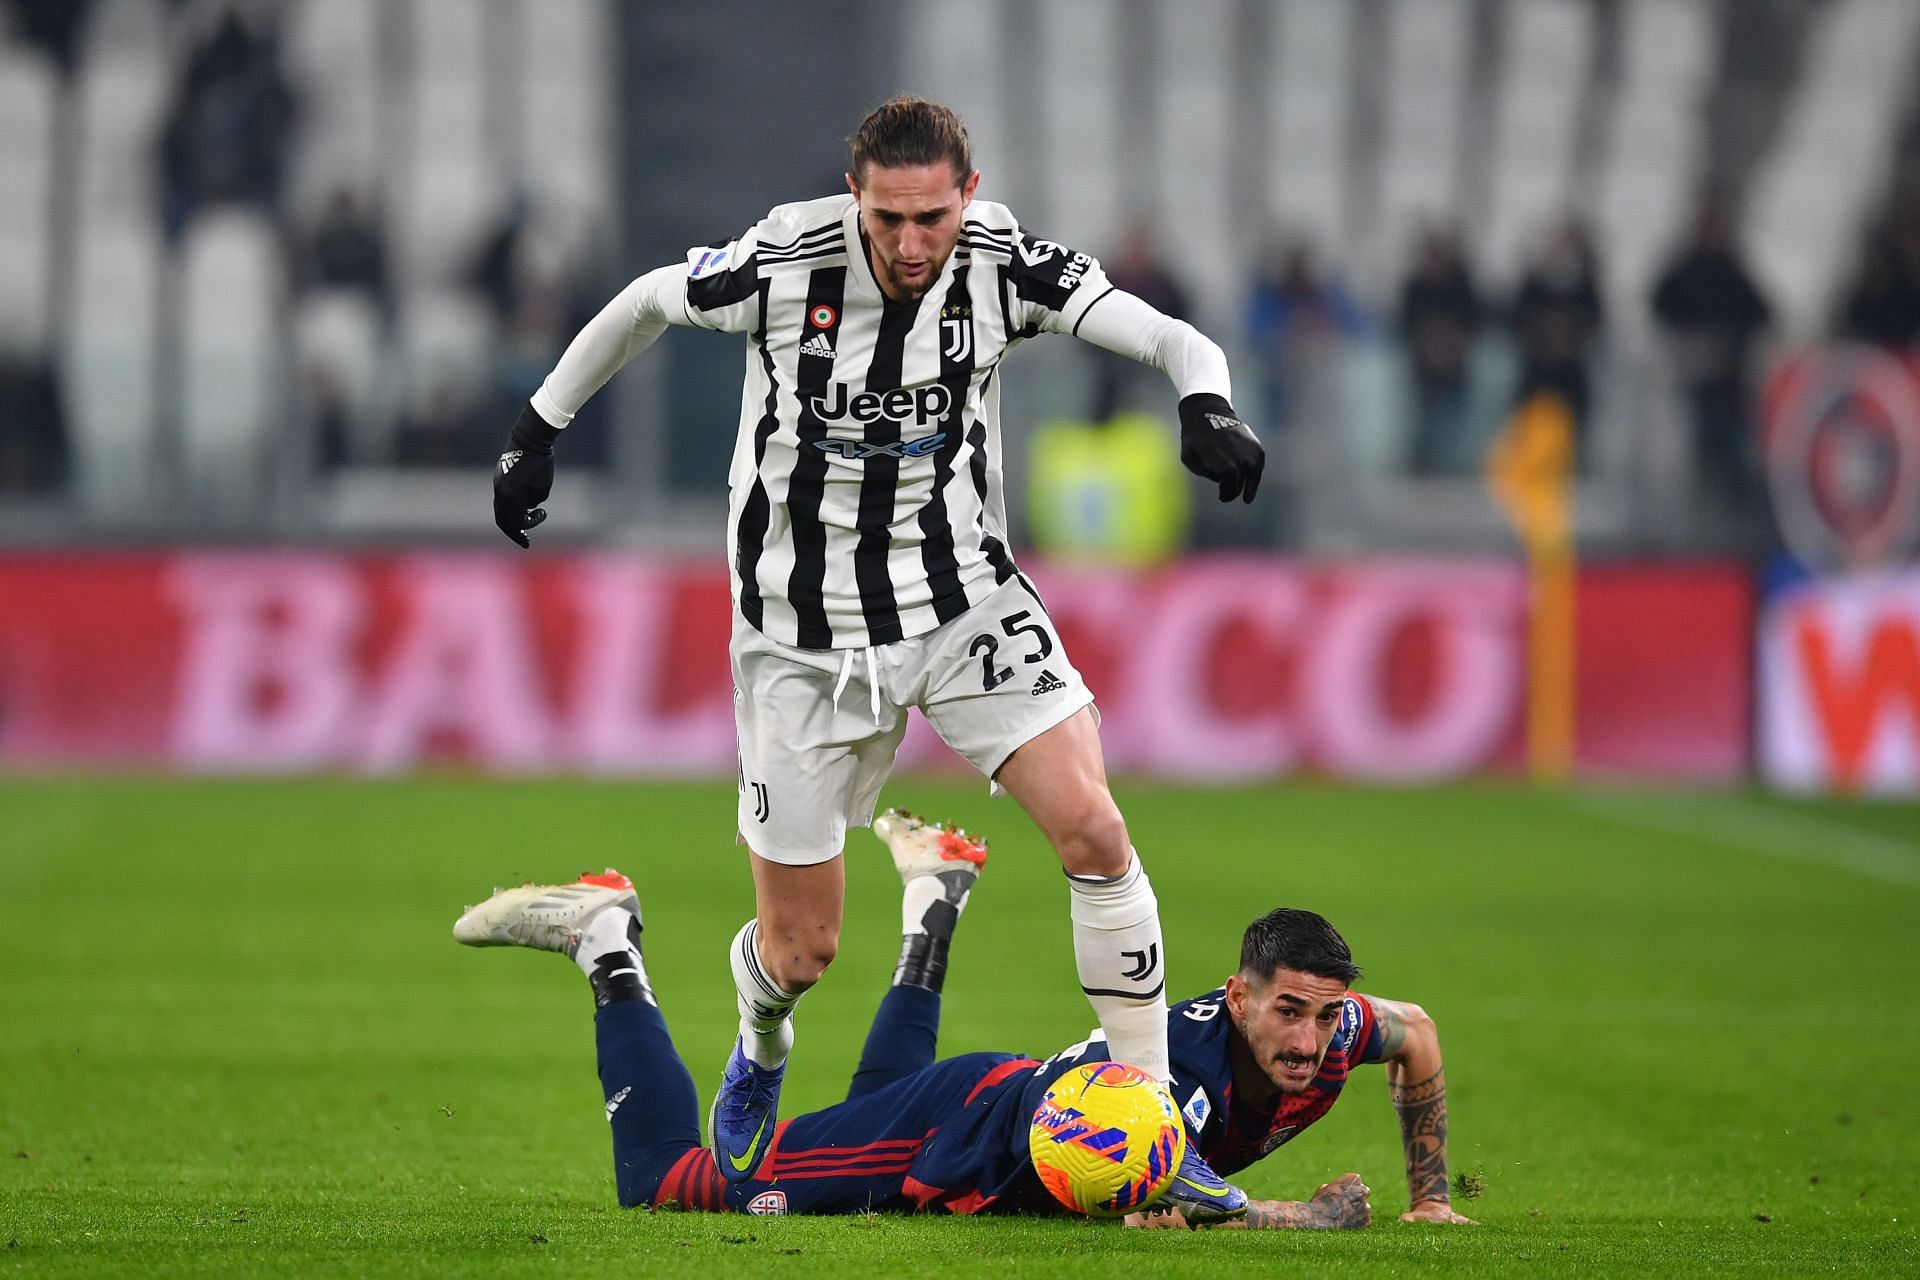 Rabiot made 46 apperances for Juventus last season